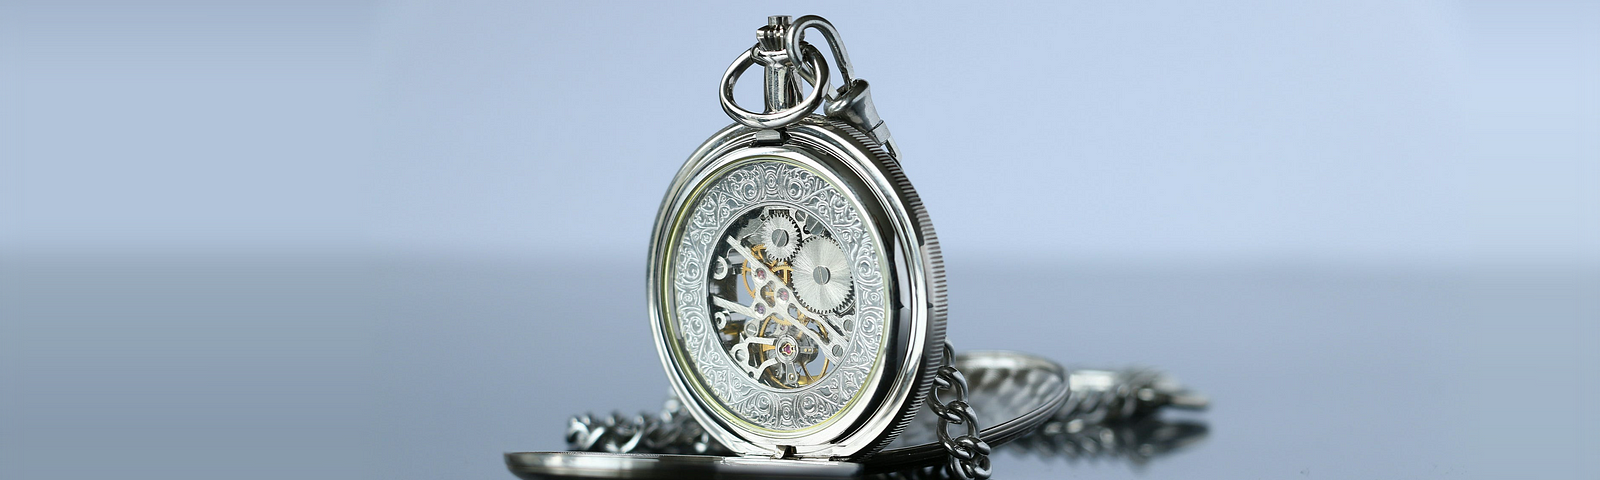 Timepiece mechanism